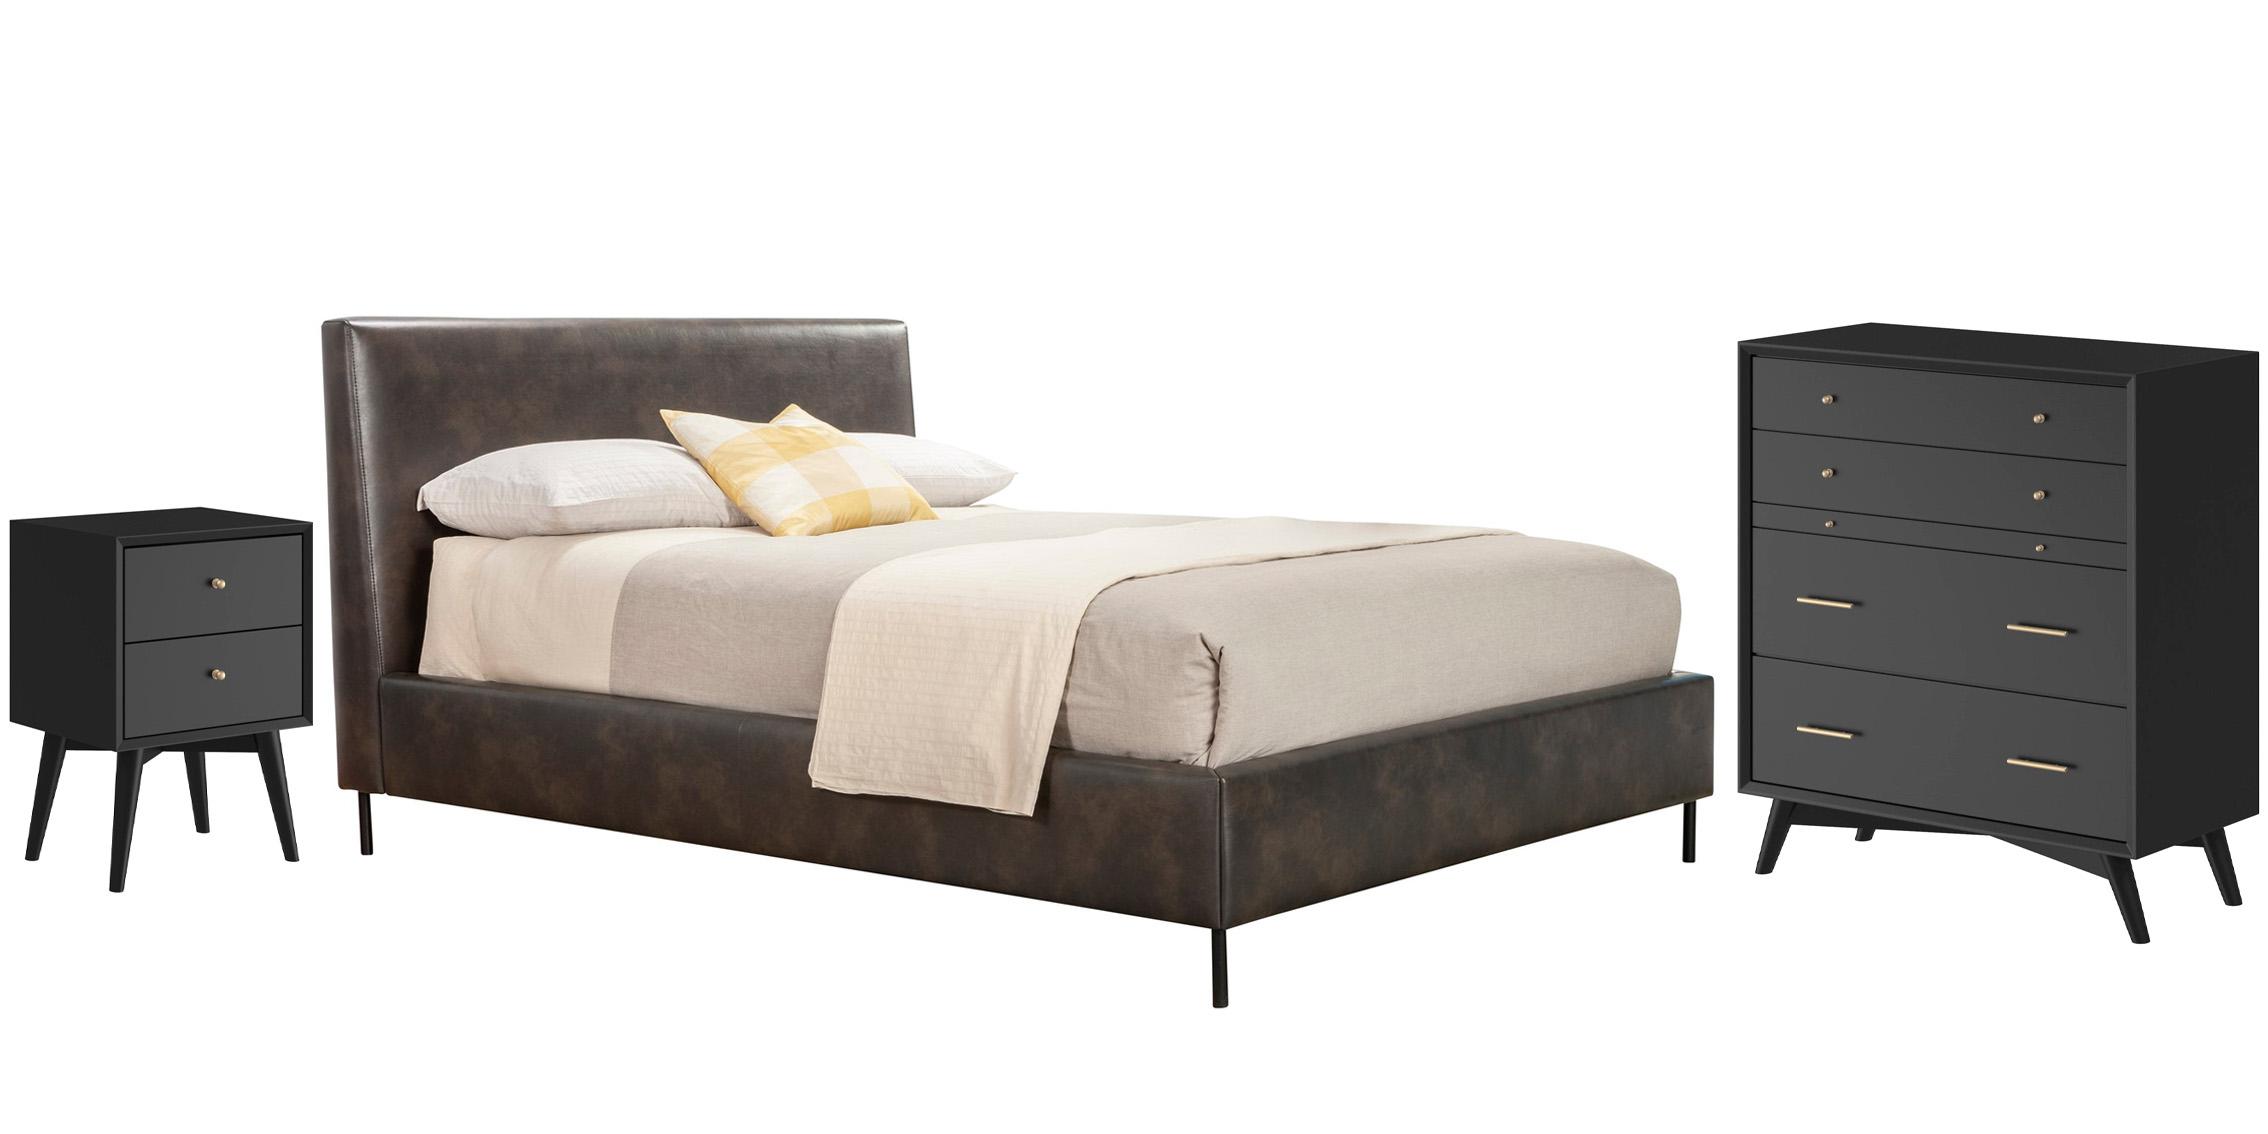 Modern Platform Bedroom Set SOPHIA  / FLYNN 6902EK-GRY-Set-3-BLK in Gray, Black Faux Leather